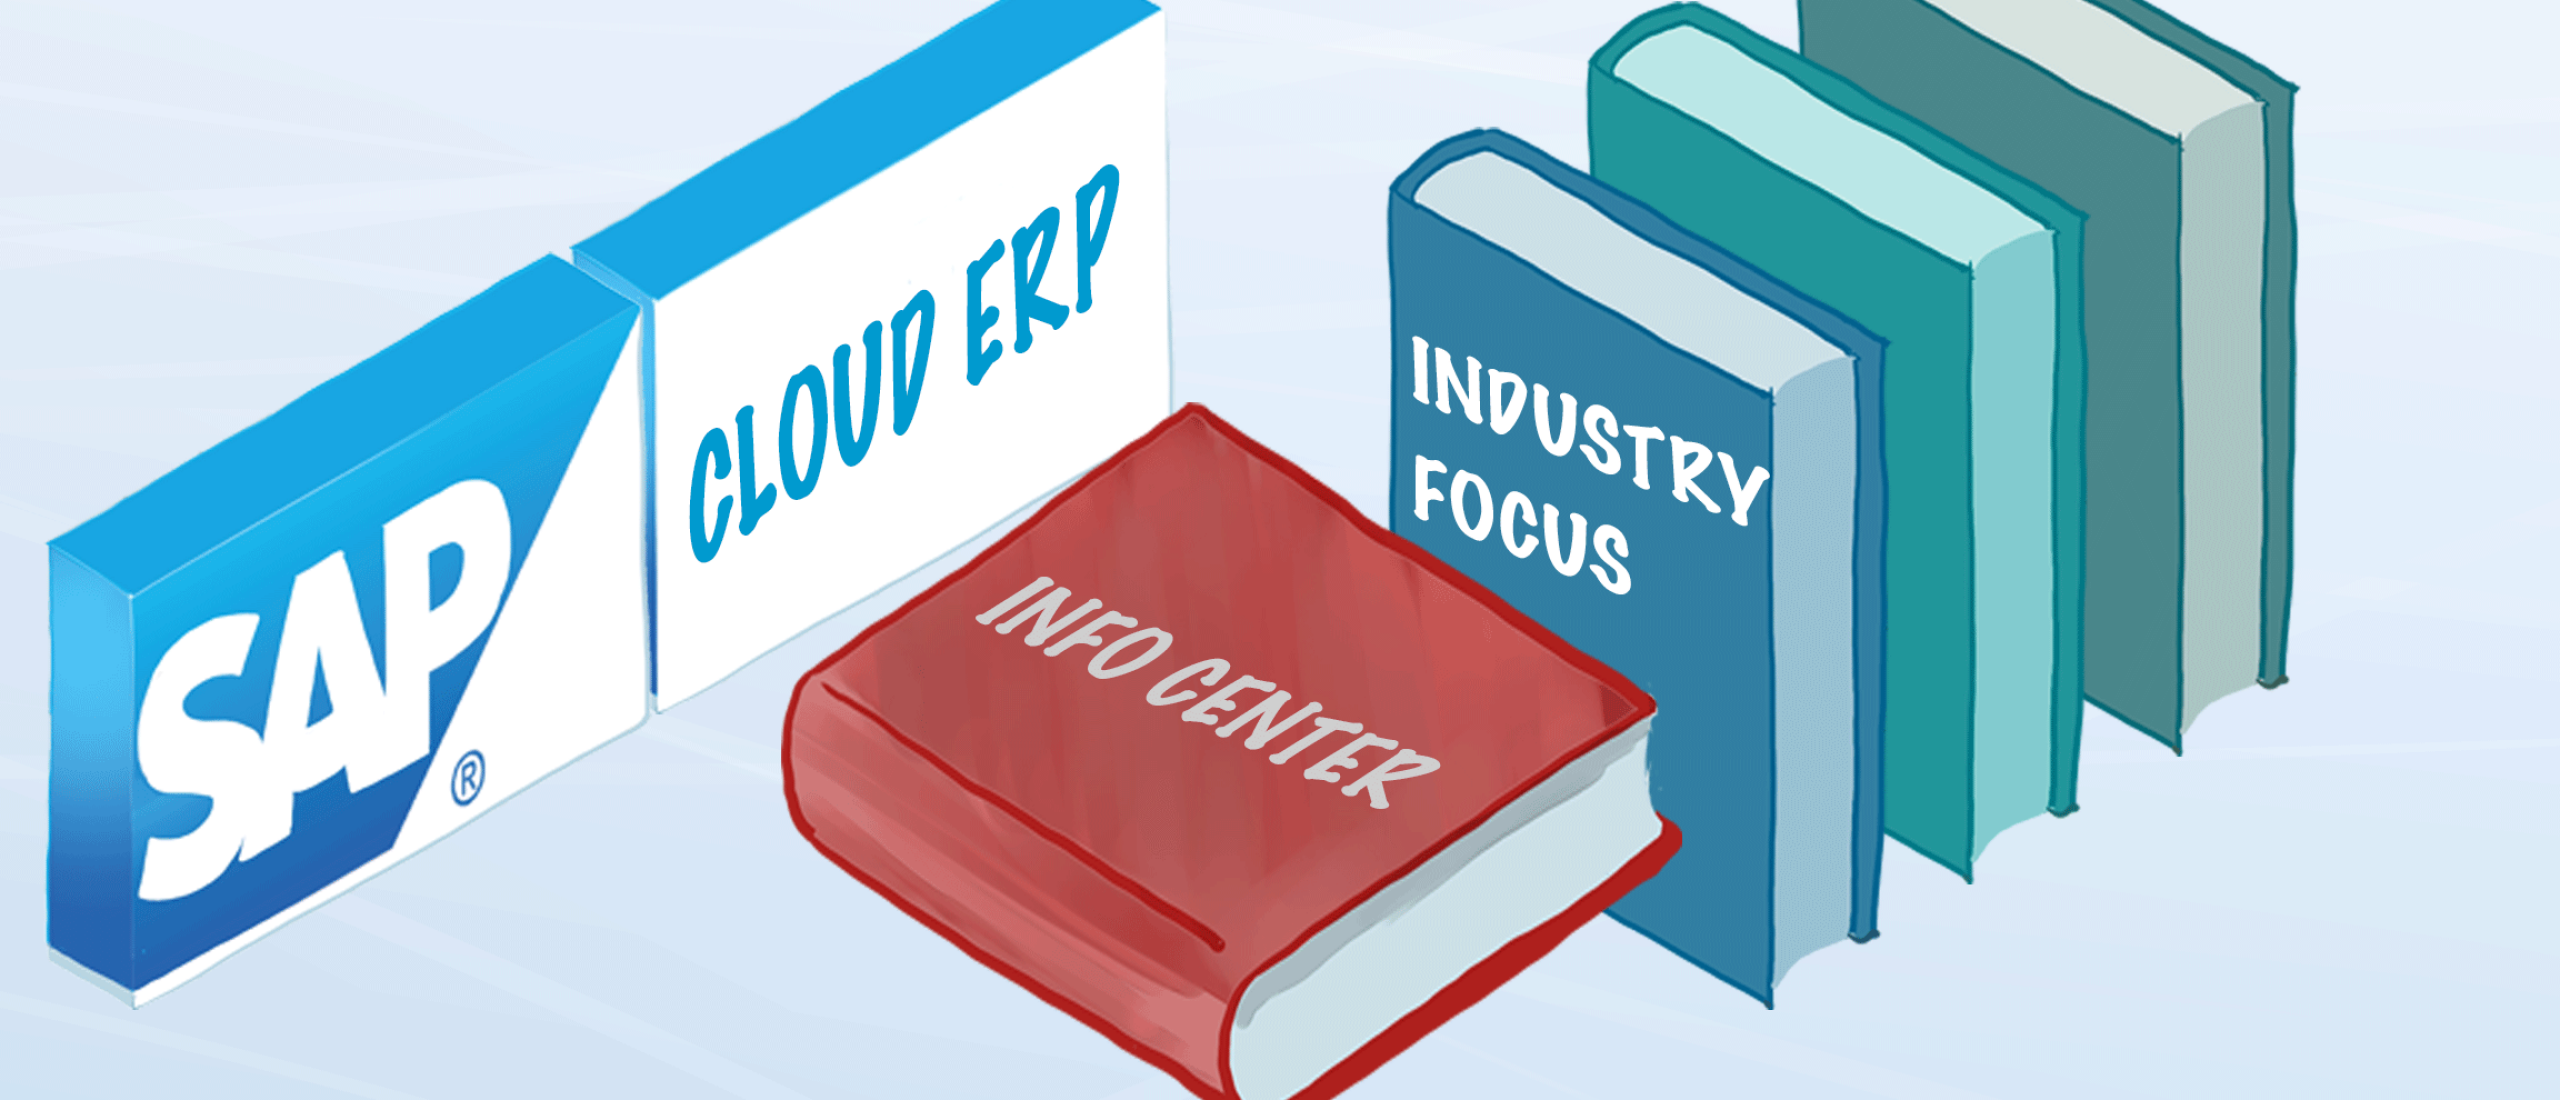 Industry Focus SAP Cloud ERP